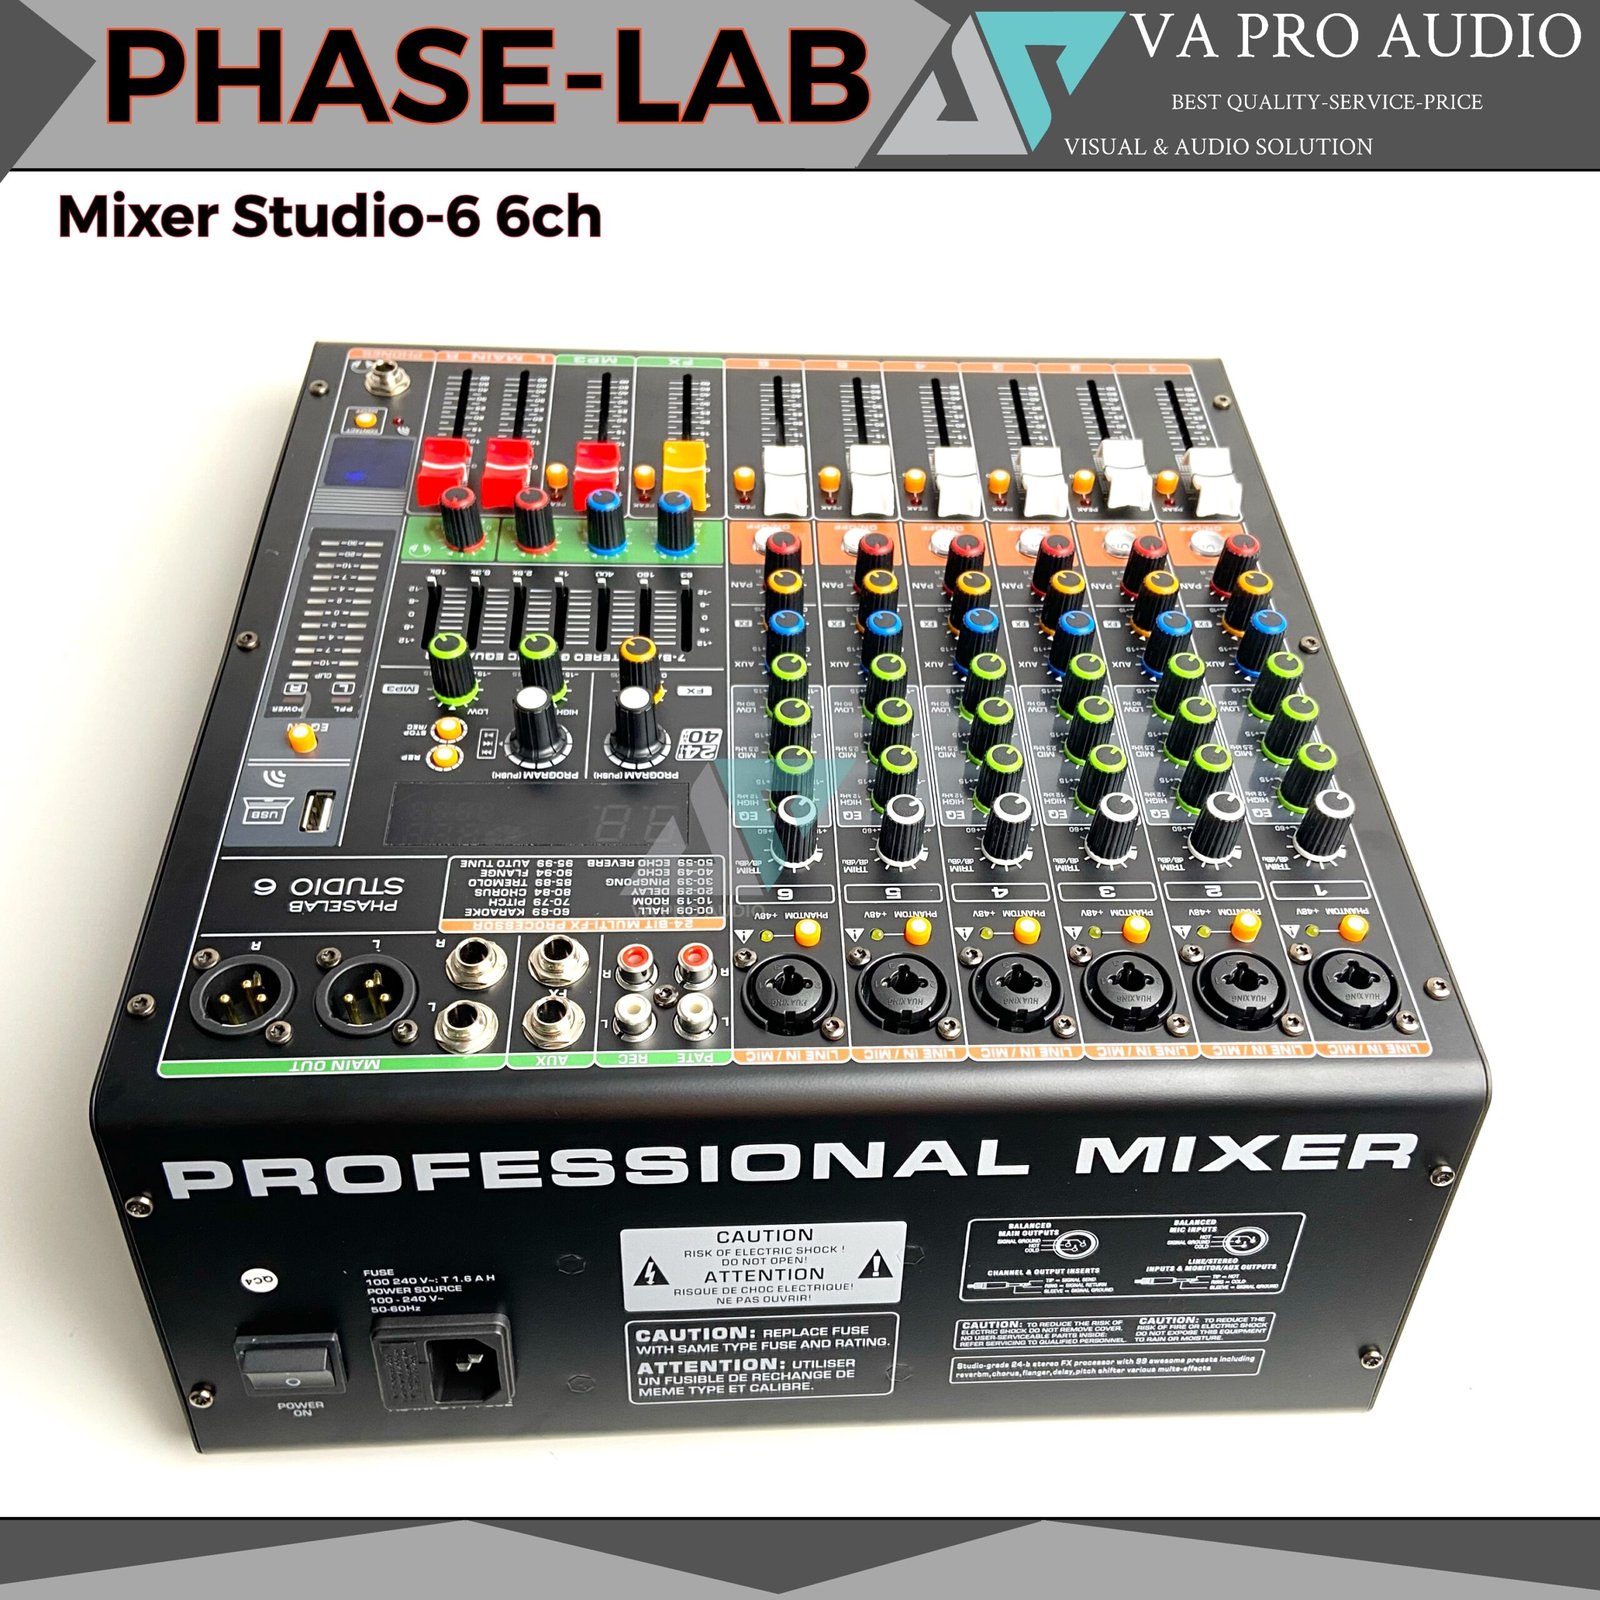 Mixer audio analog phaselab studio 6 ch - VA PRO AUDIO